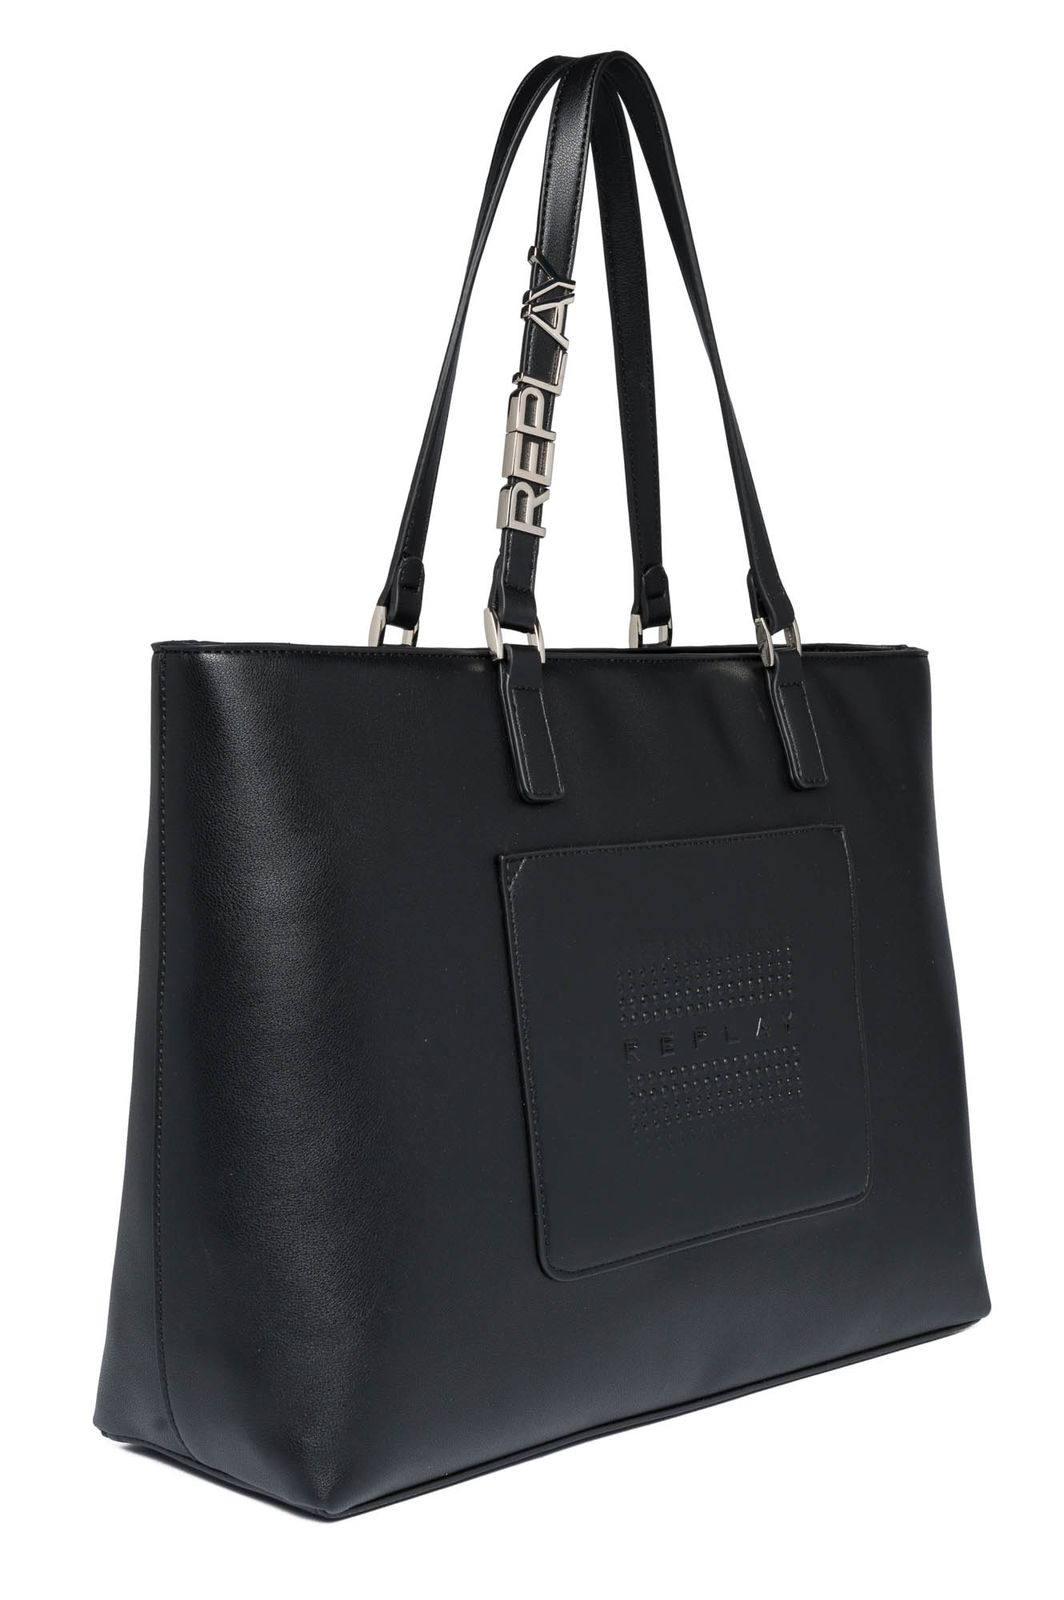 REPLAY Shopper shopper bag Black | Buy bags, purses & accessories ...